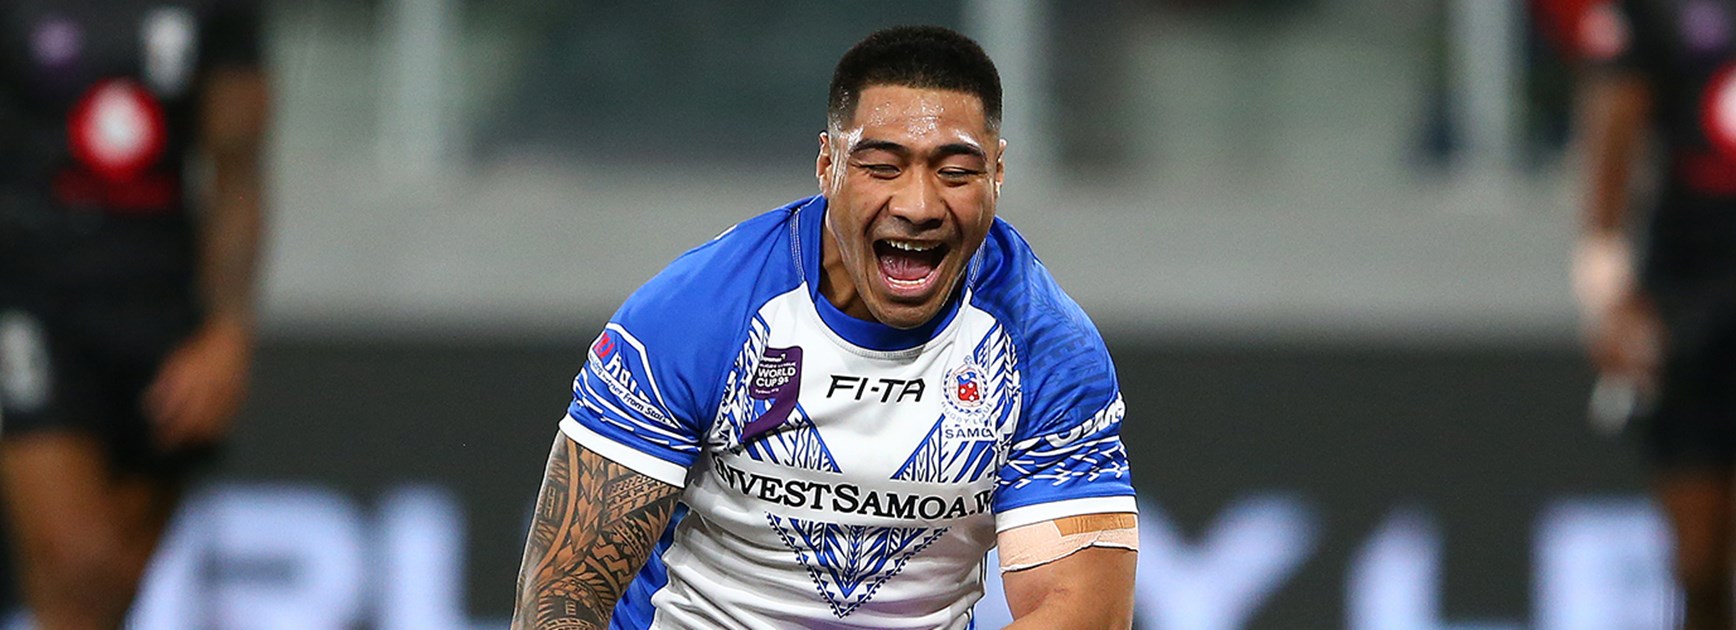 Panthers’ Samoan stars shine in semi-finals surge